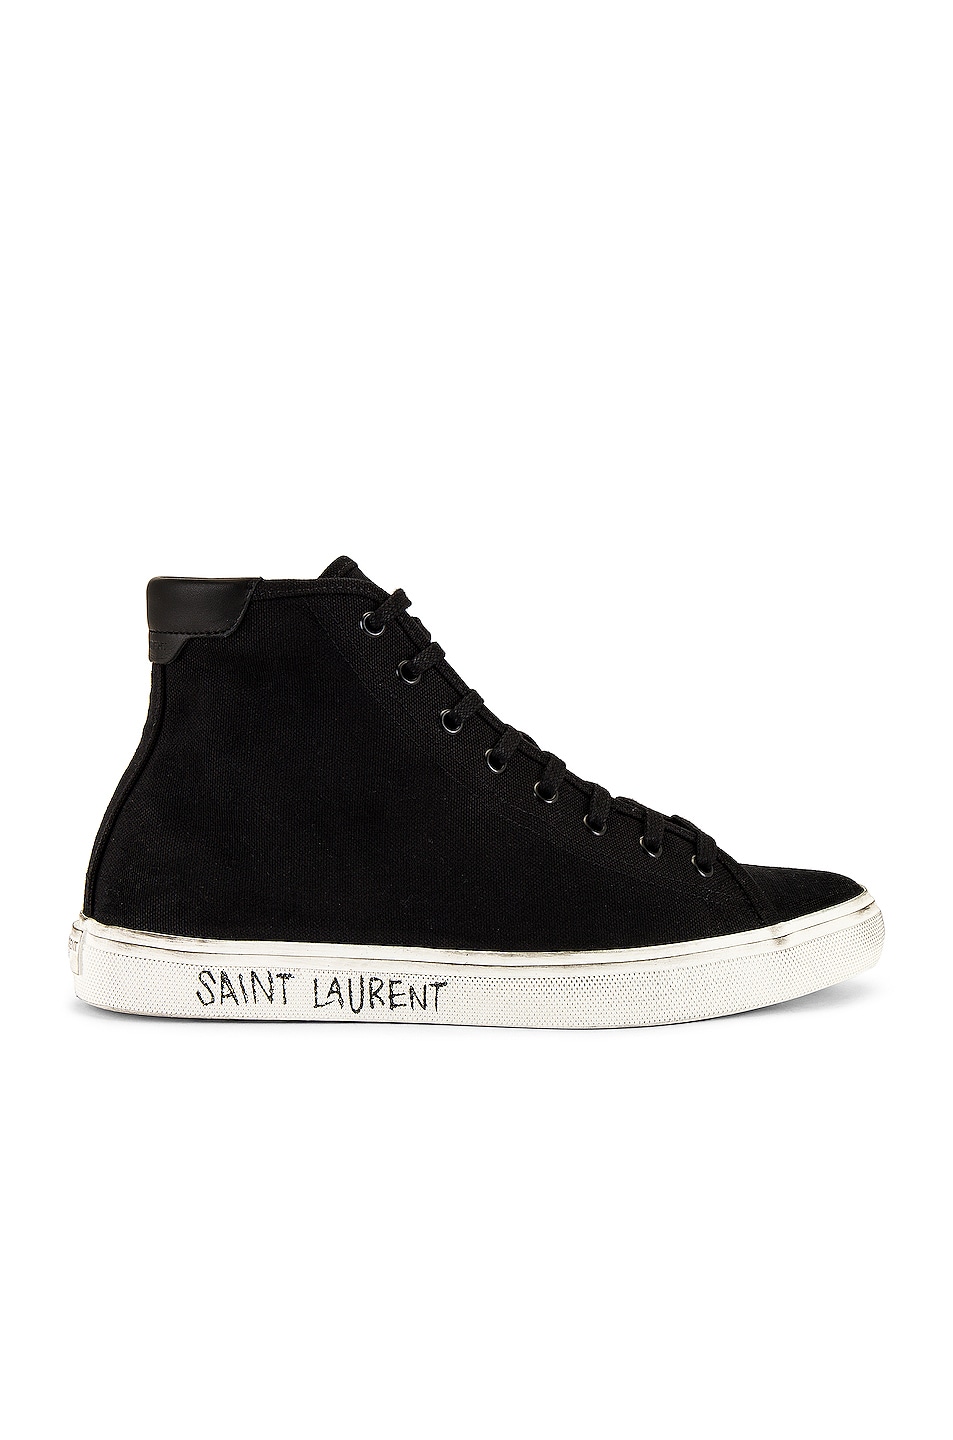 Image 1 of Saint Laurent Malibu Sneaker in Black